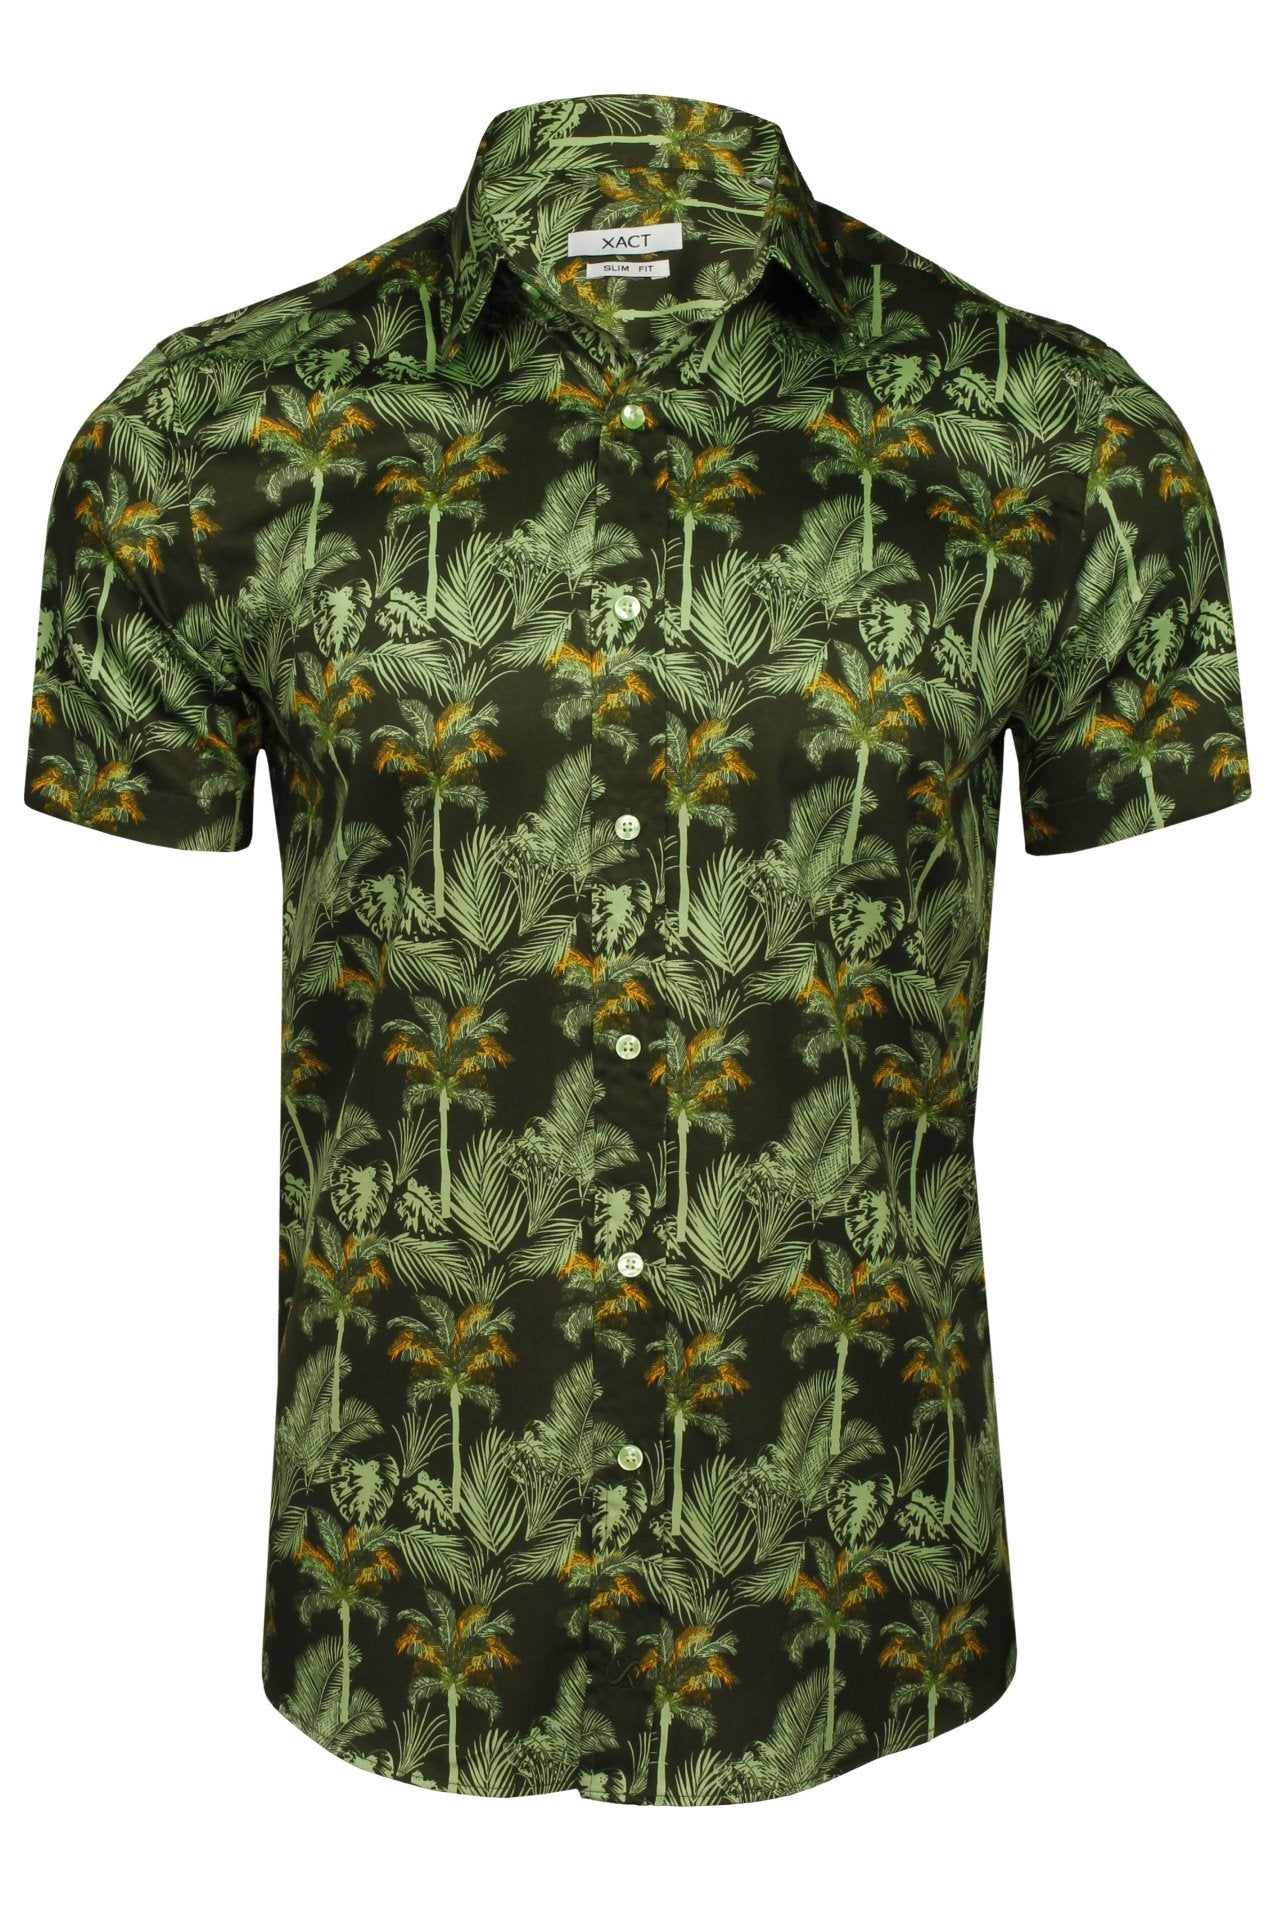 Xact Mens Cotton Palm Tree Hawaiian Shirt, Short Sleeved-Main Image